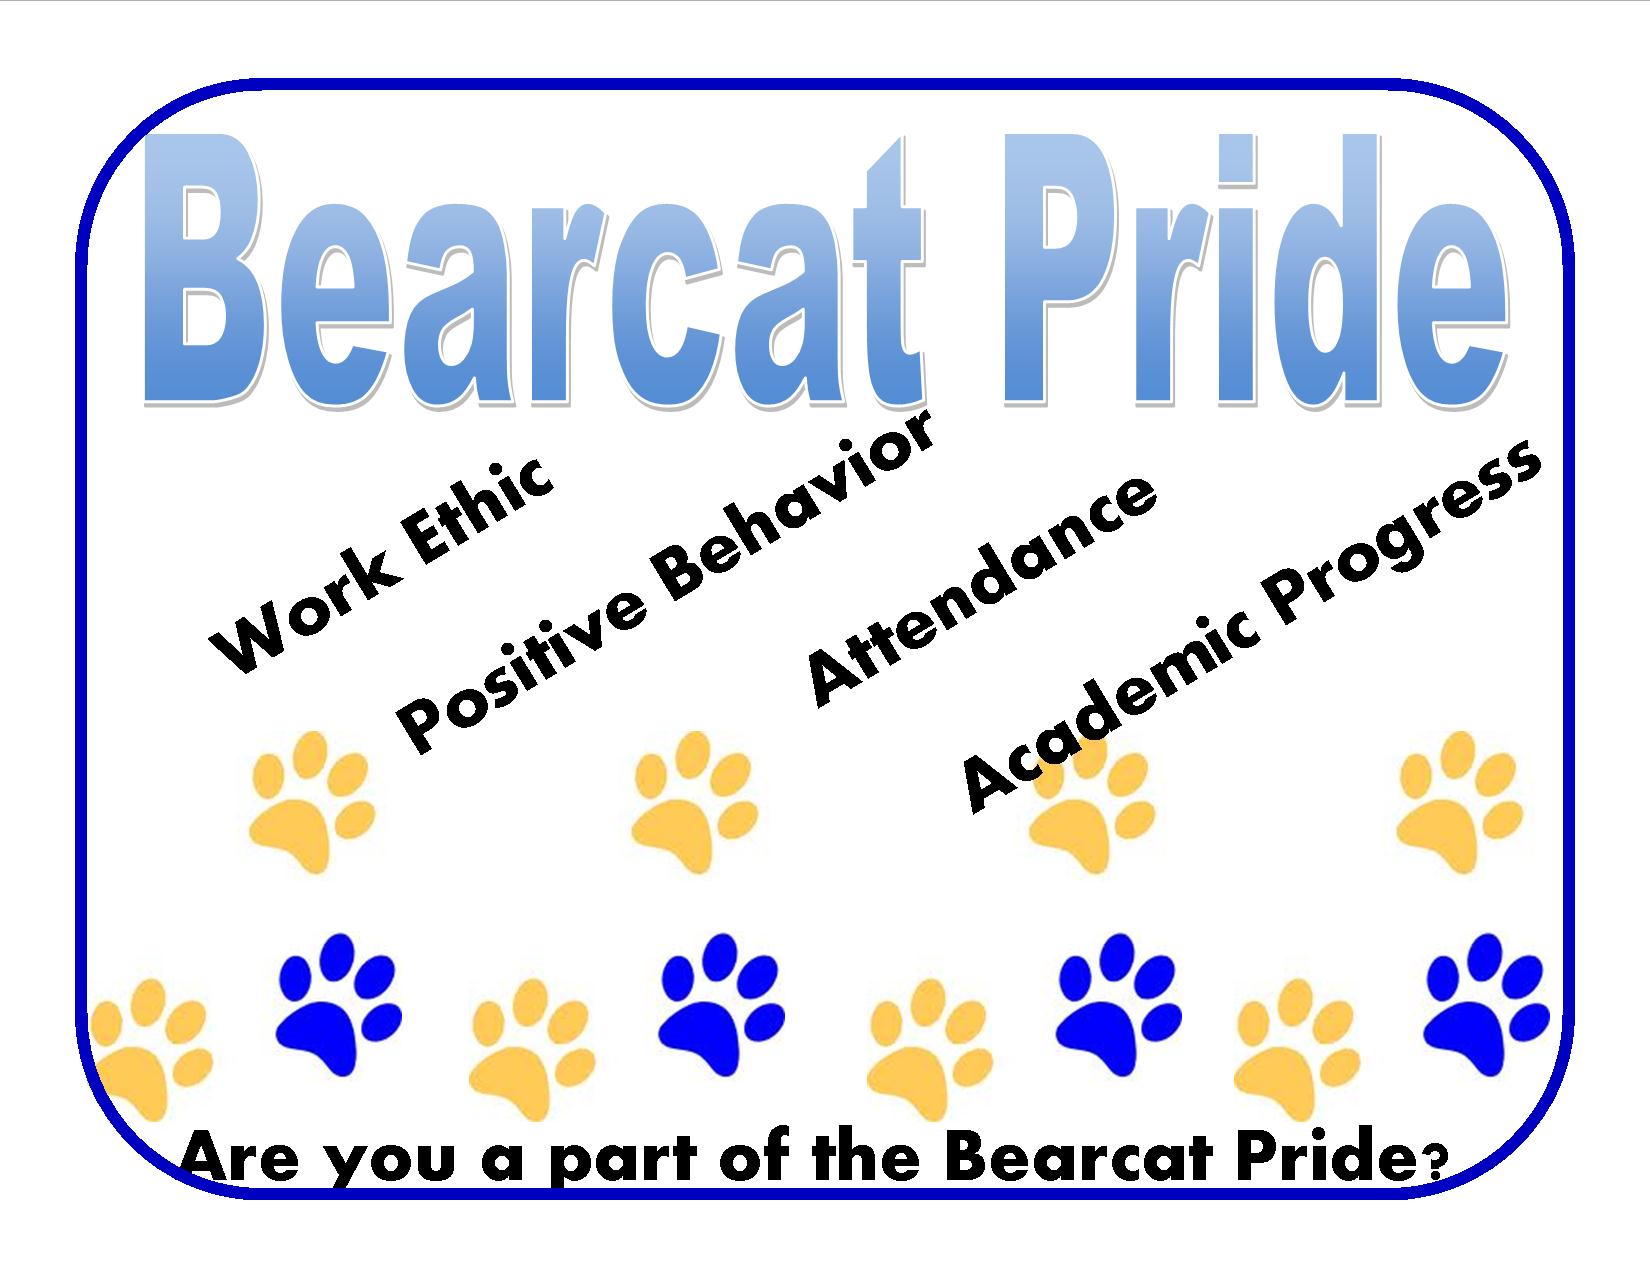 Bearcat Pride Work Ethic Positive Behavior Attendance Academic Progress Are you a part of the Bearcat Pride?